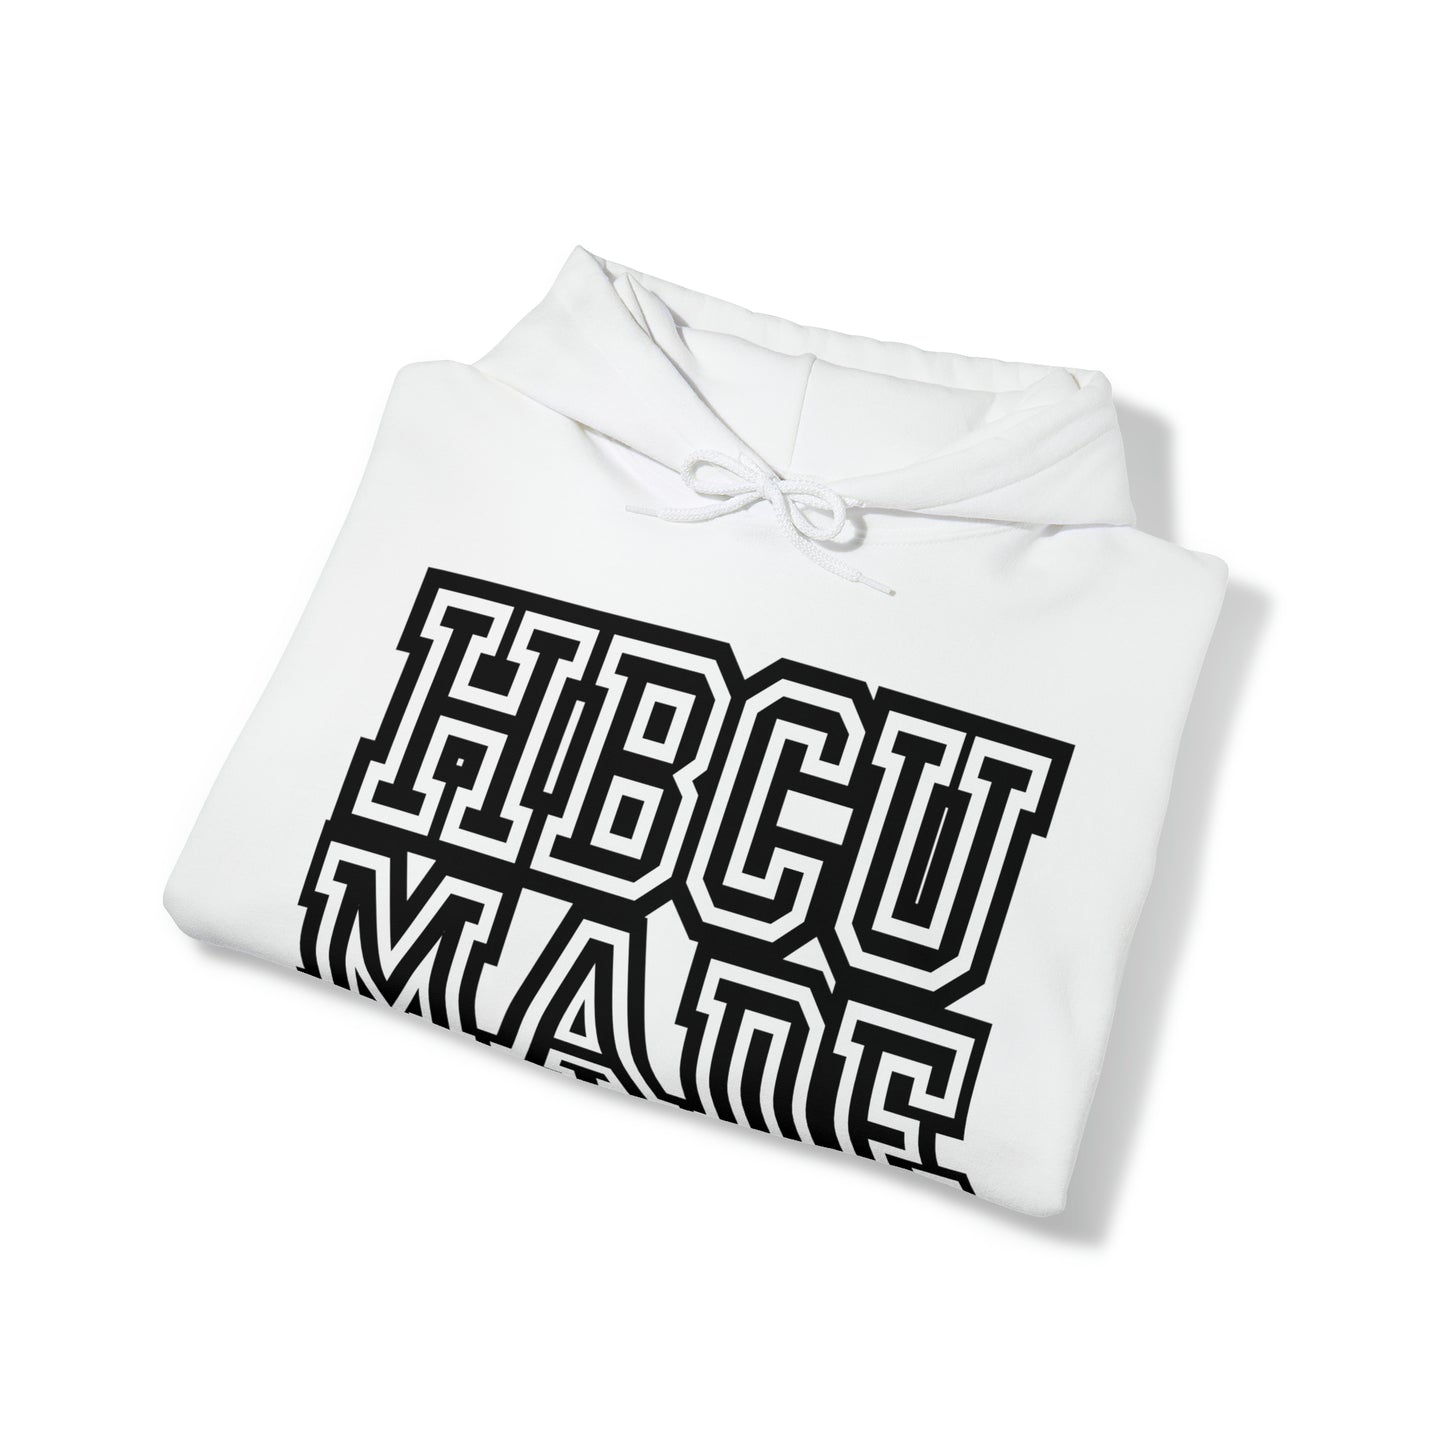 HBCU Made Unisex Heavy Blend™ Hooded Sweatshirt